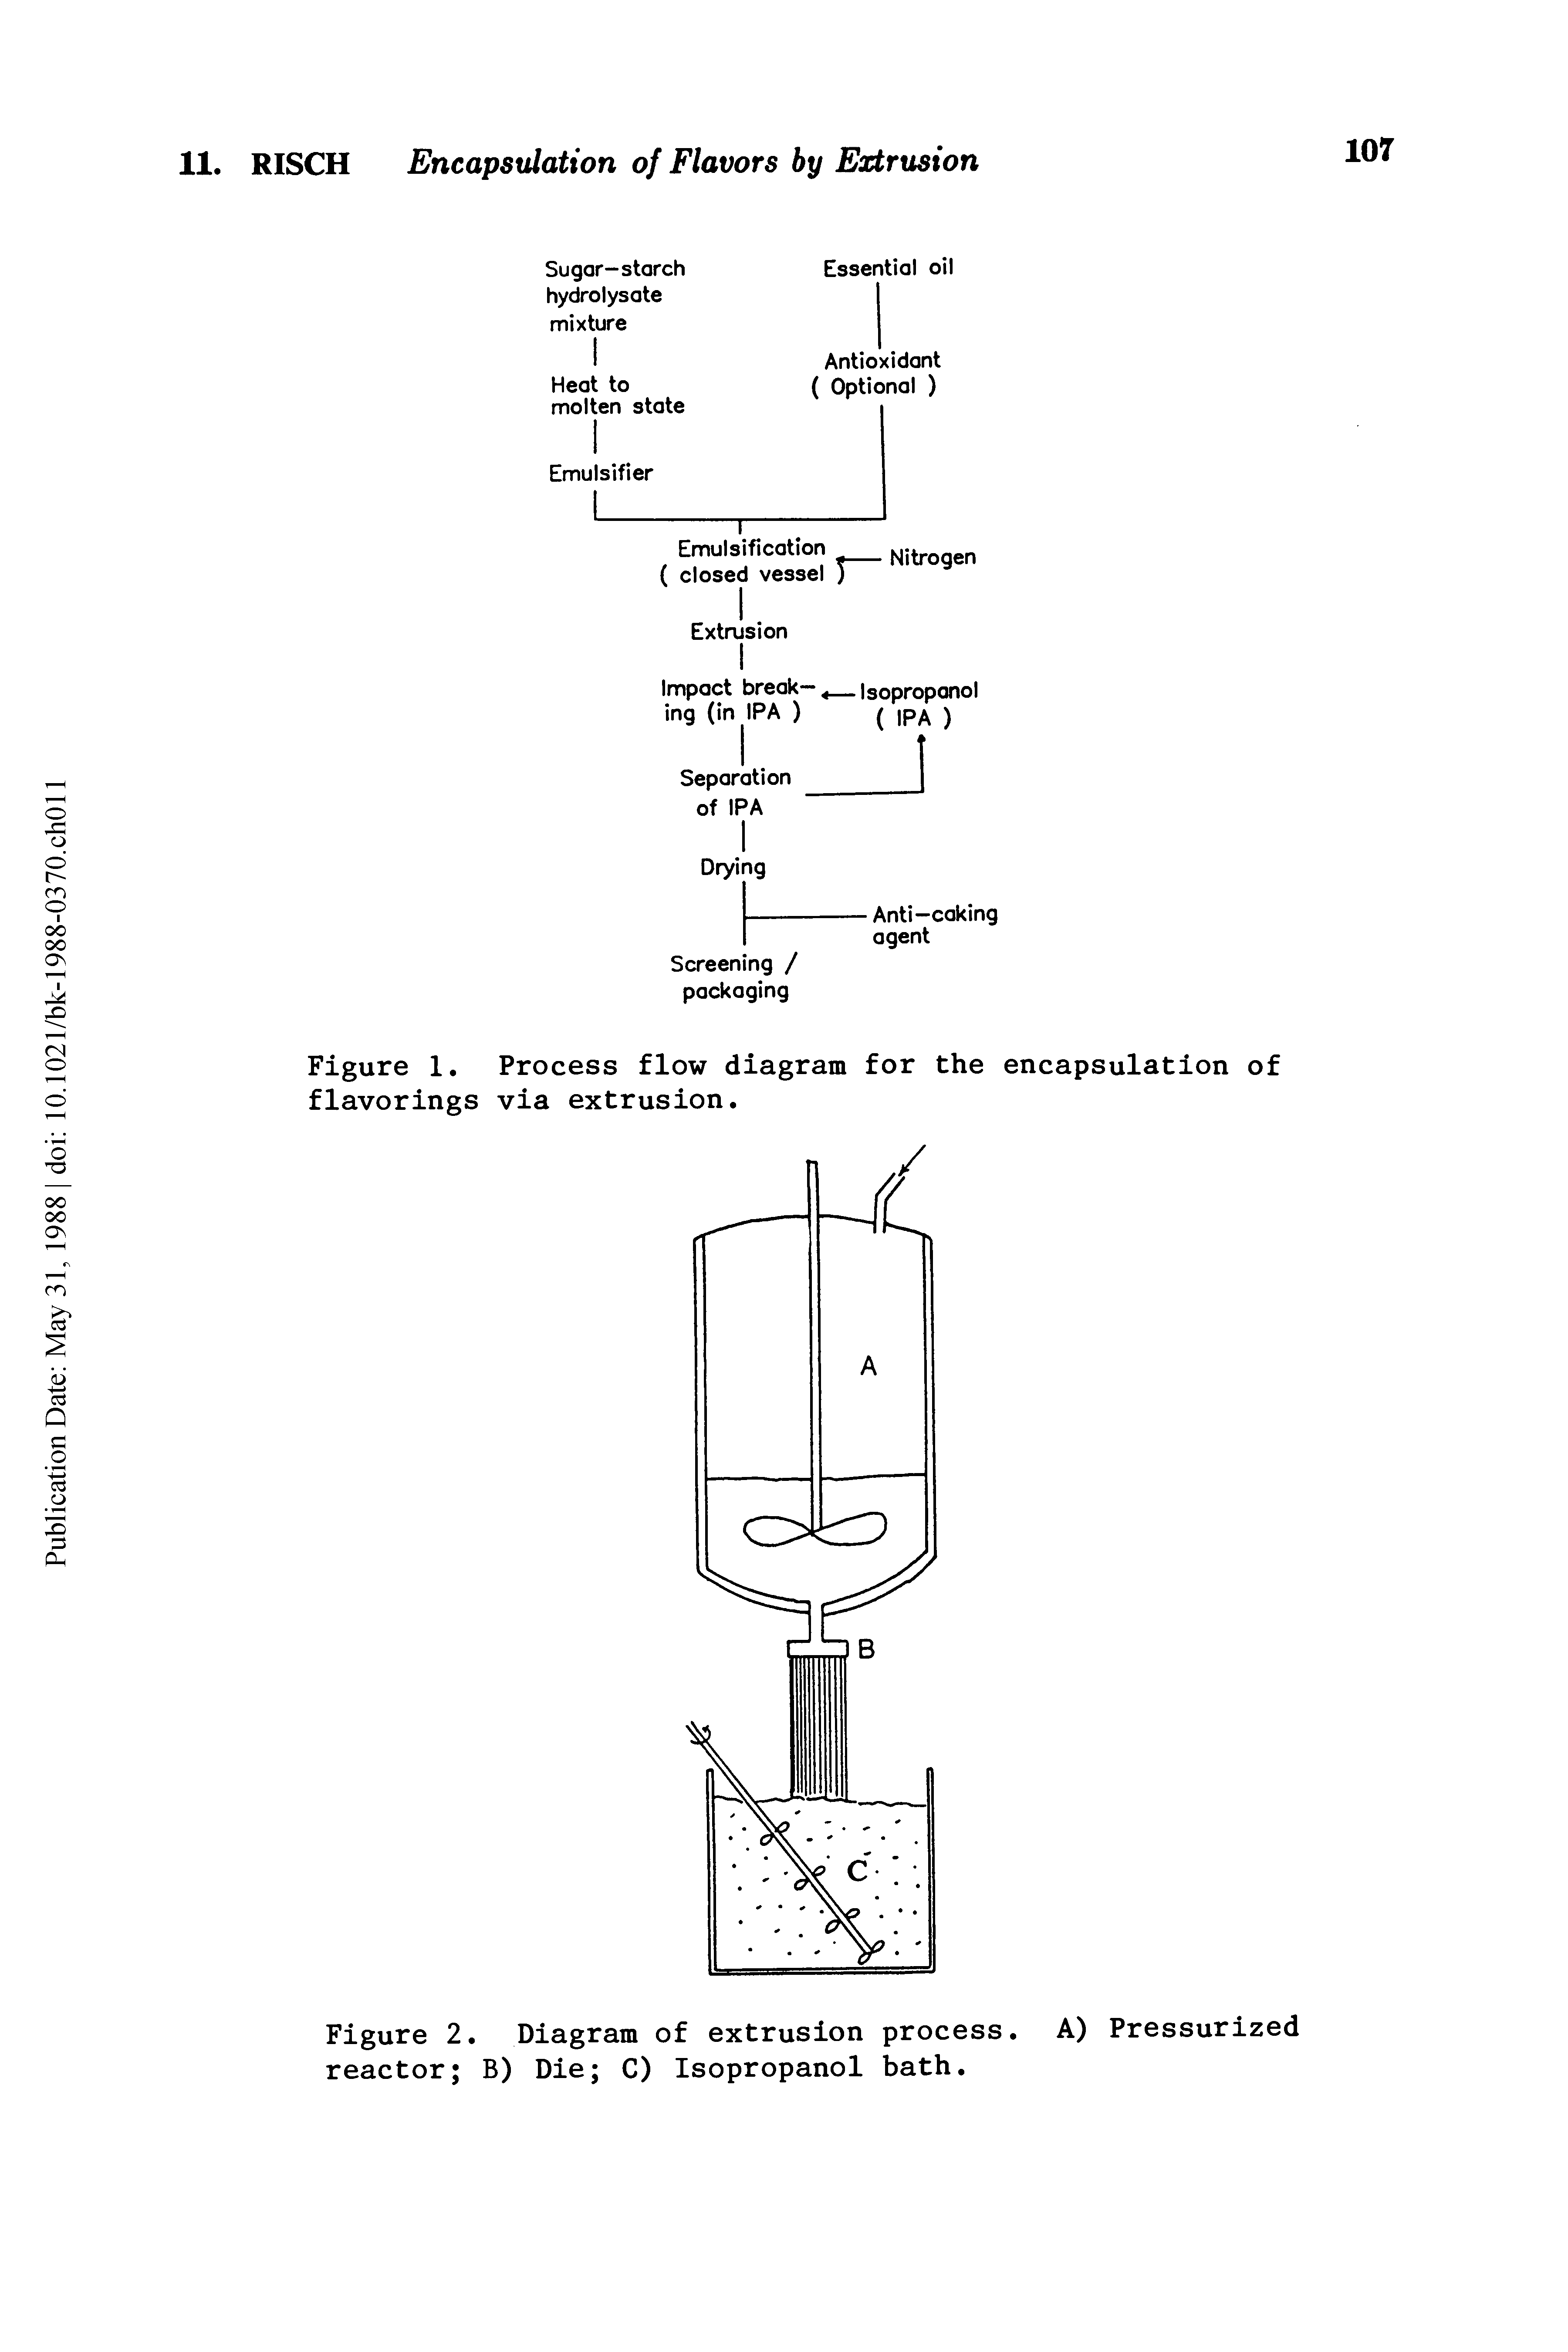 Figure 1. Process flow diagram for the encapsulation of flavorings via extrusion.